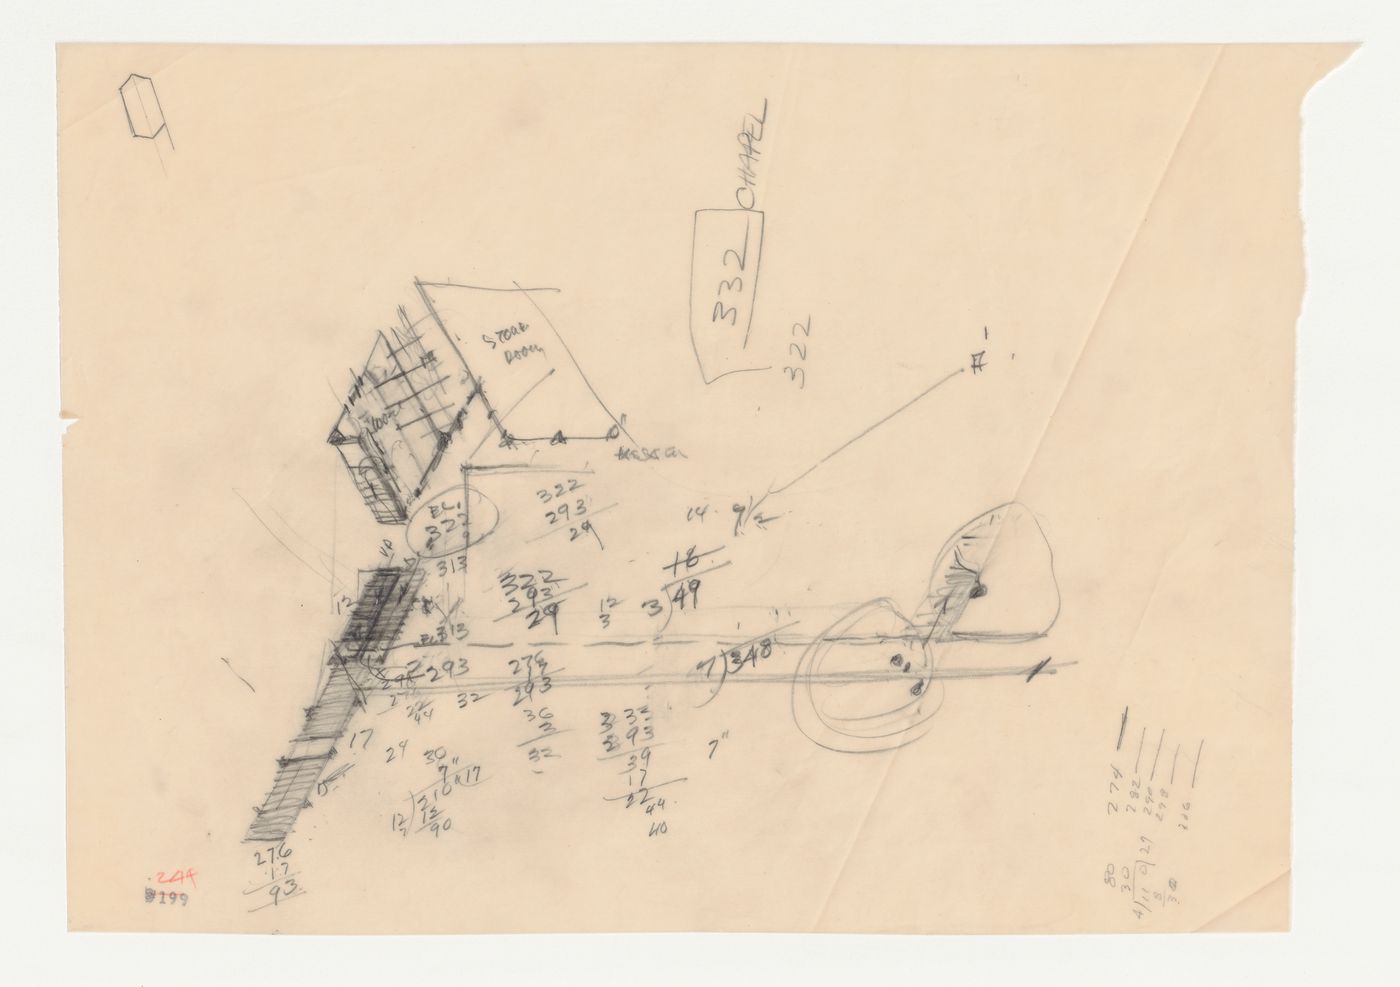 Swedenborg Memorial Chapel, El Cerrito, California: Partial sketch plan and calculations for the lower building